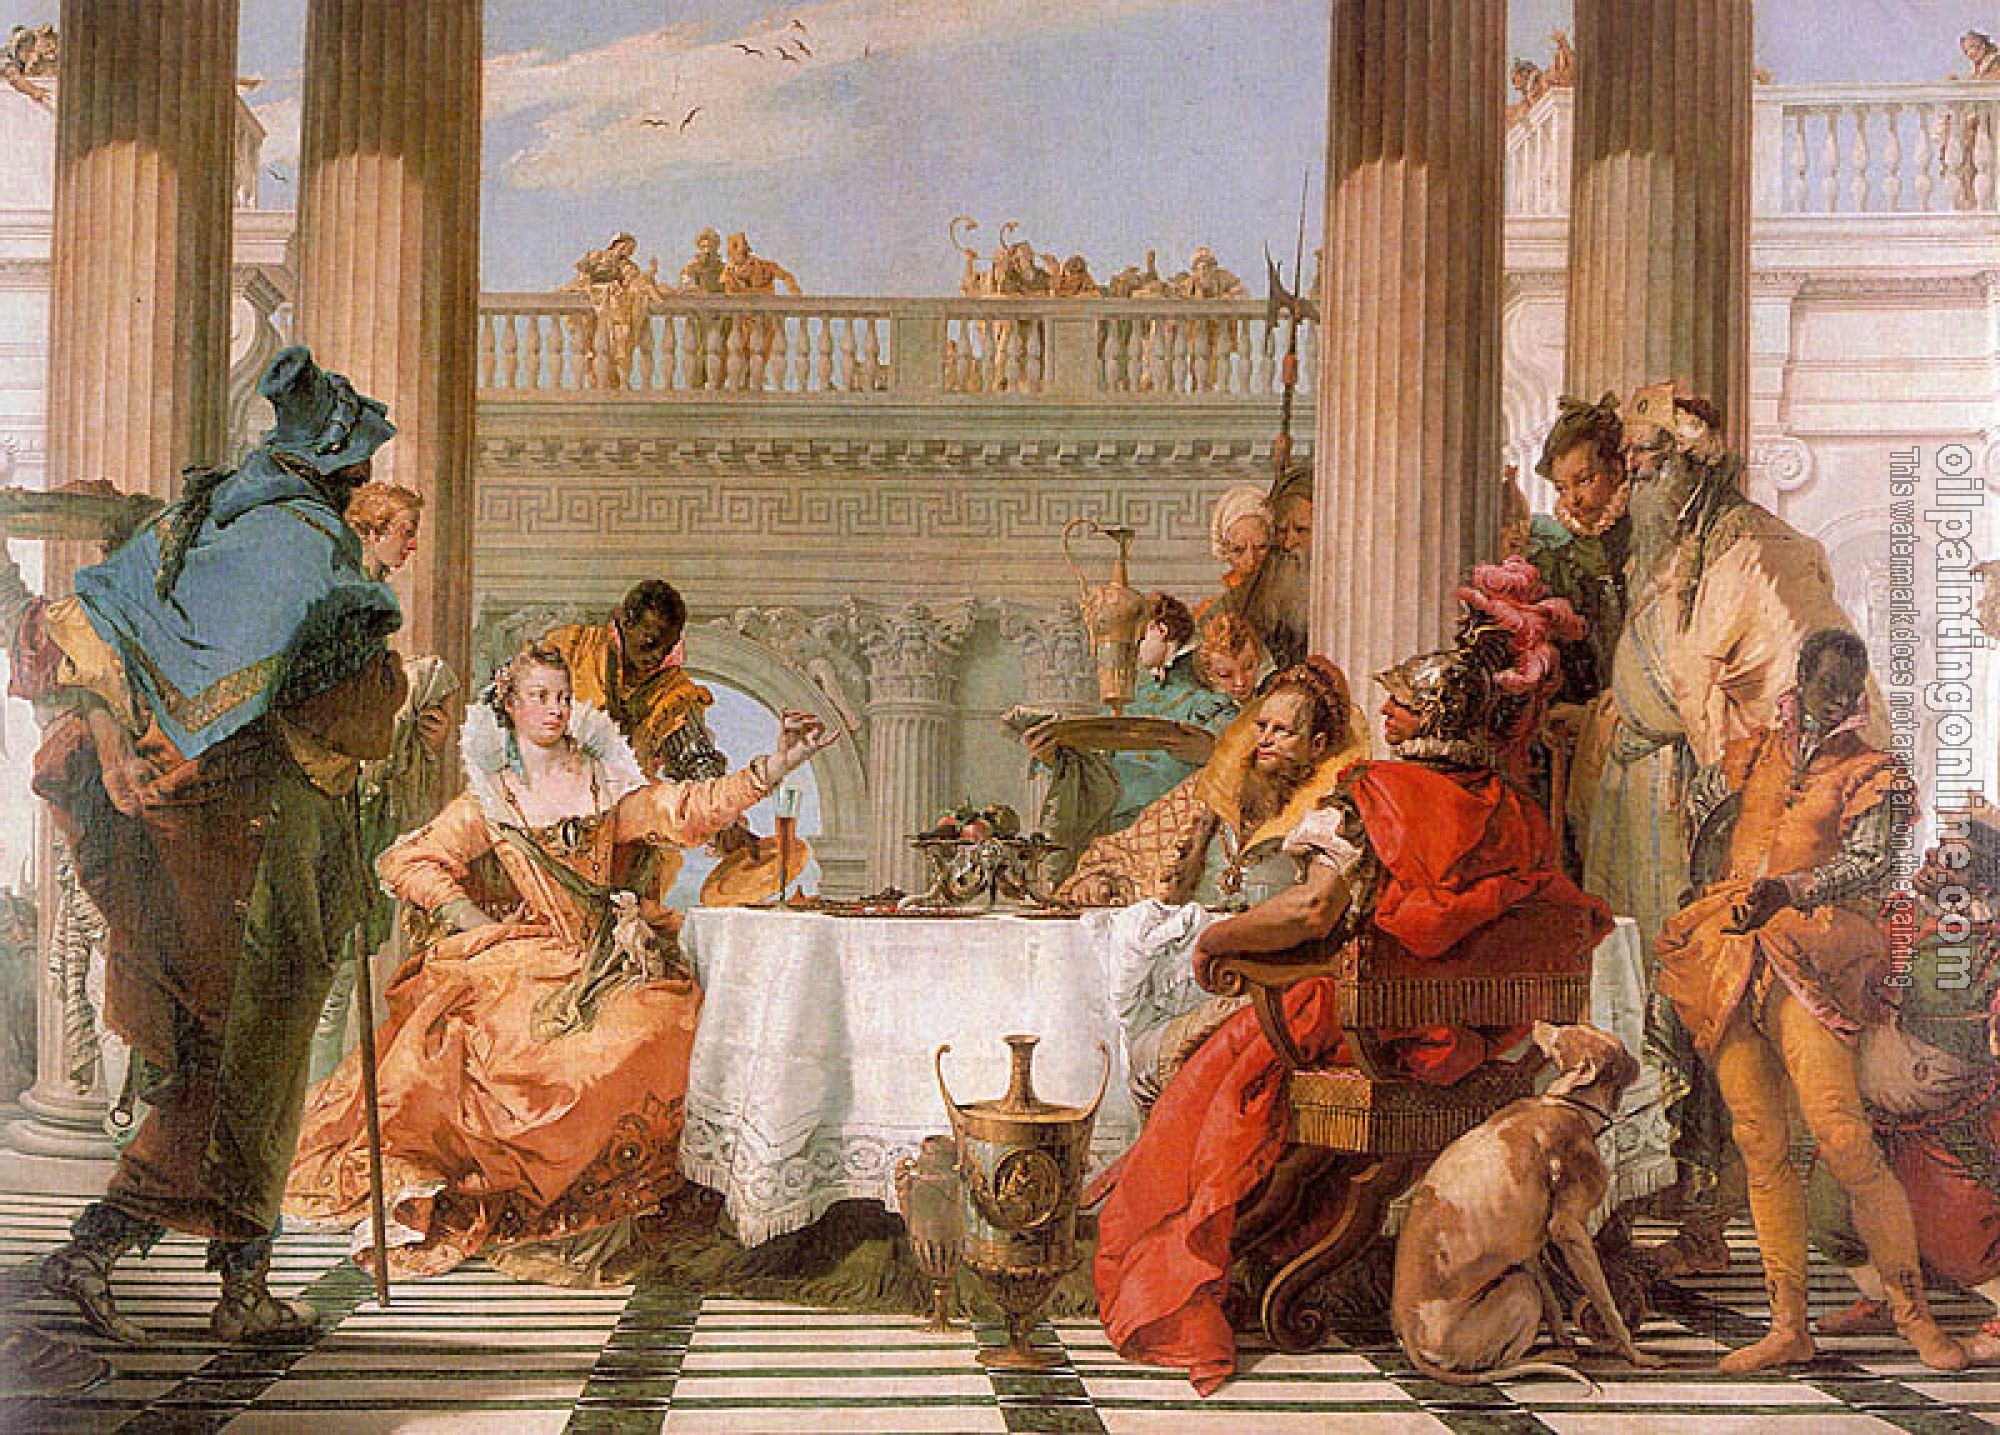 Tiepolo, Giovanni Battista - The Banquet of Cleopatra